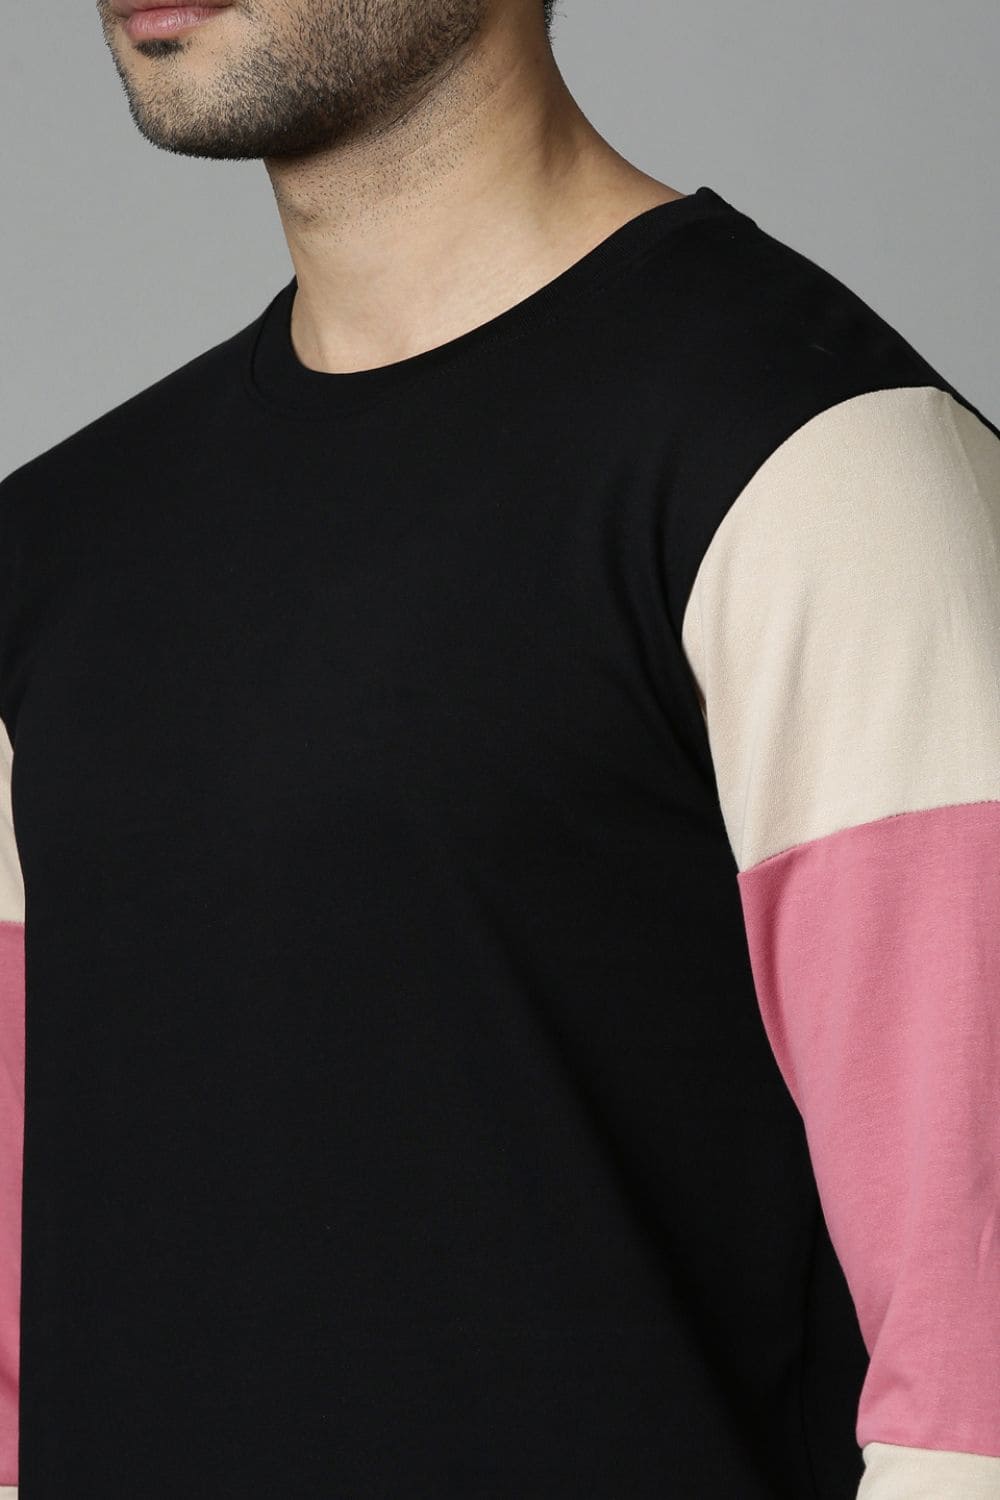 Color block sleeves - Black t-shirt